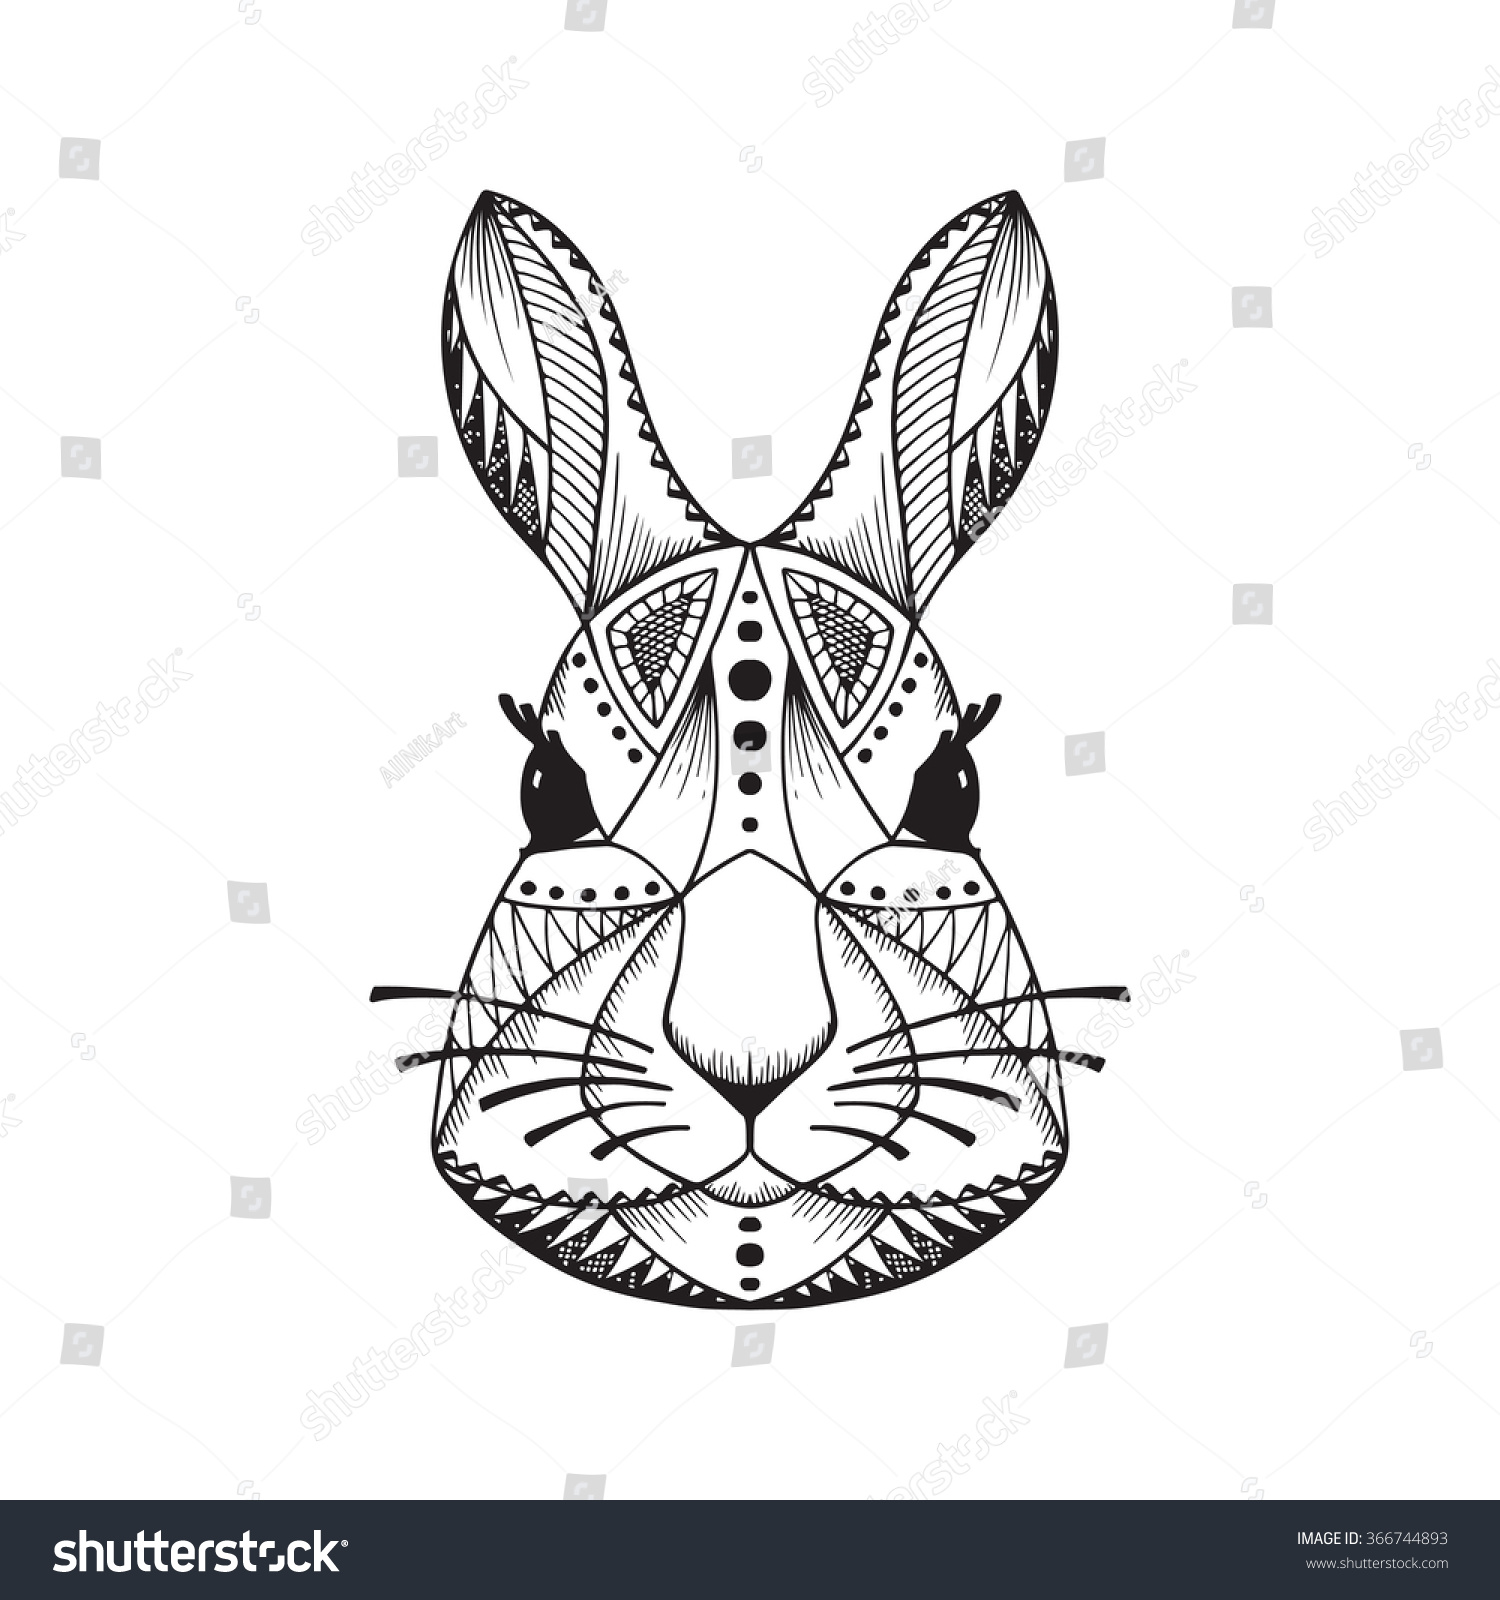 Rabbit head pattern